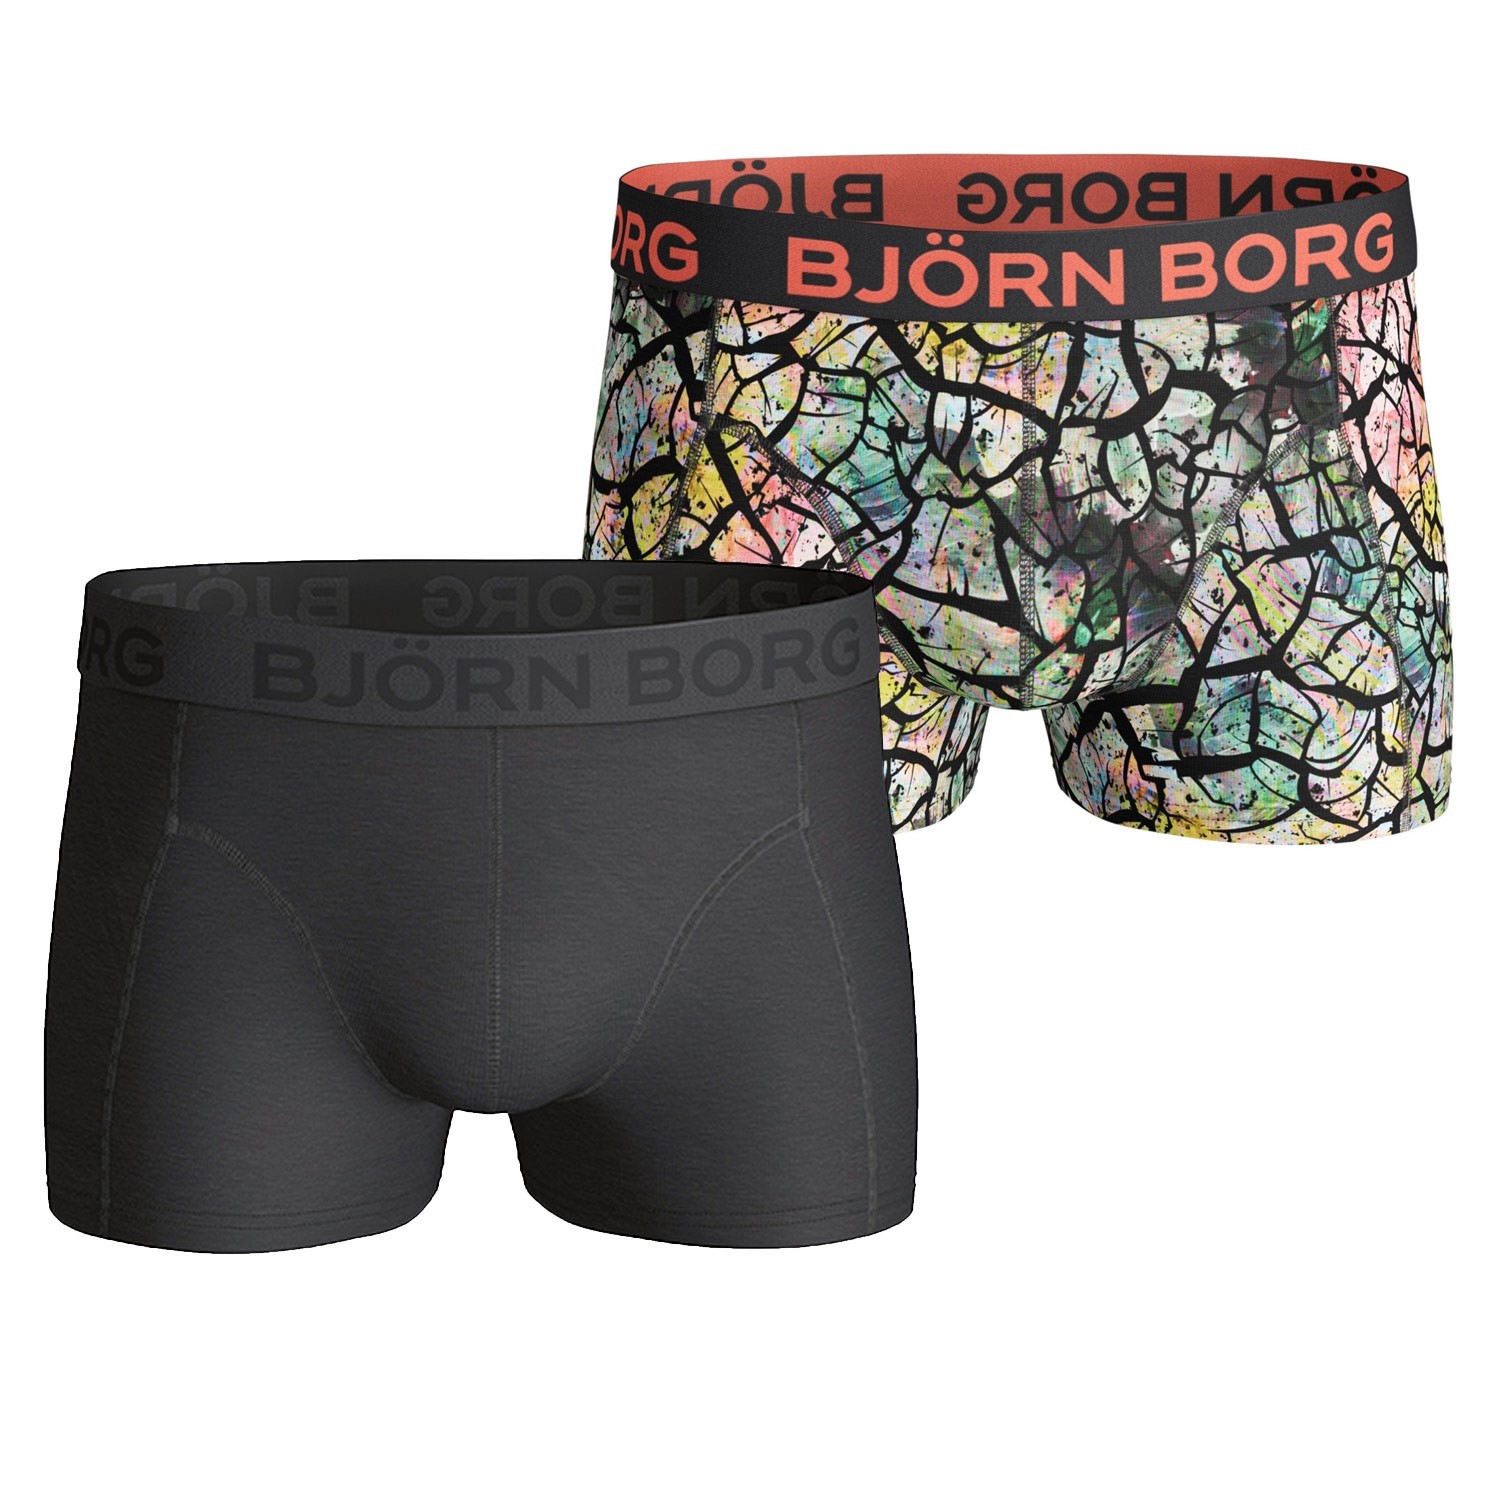 Björn Borg Short Shorts Drylands and Black